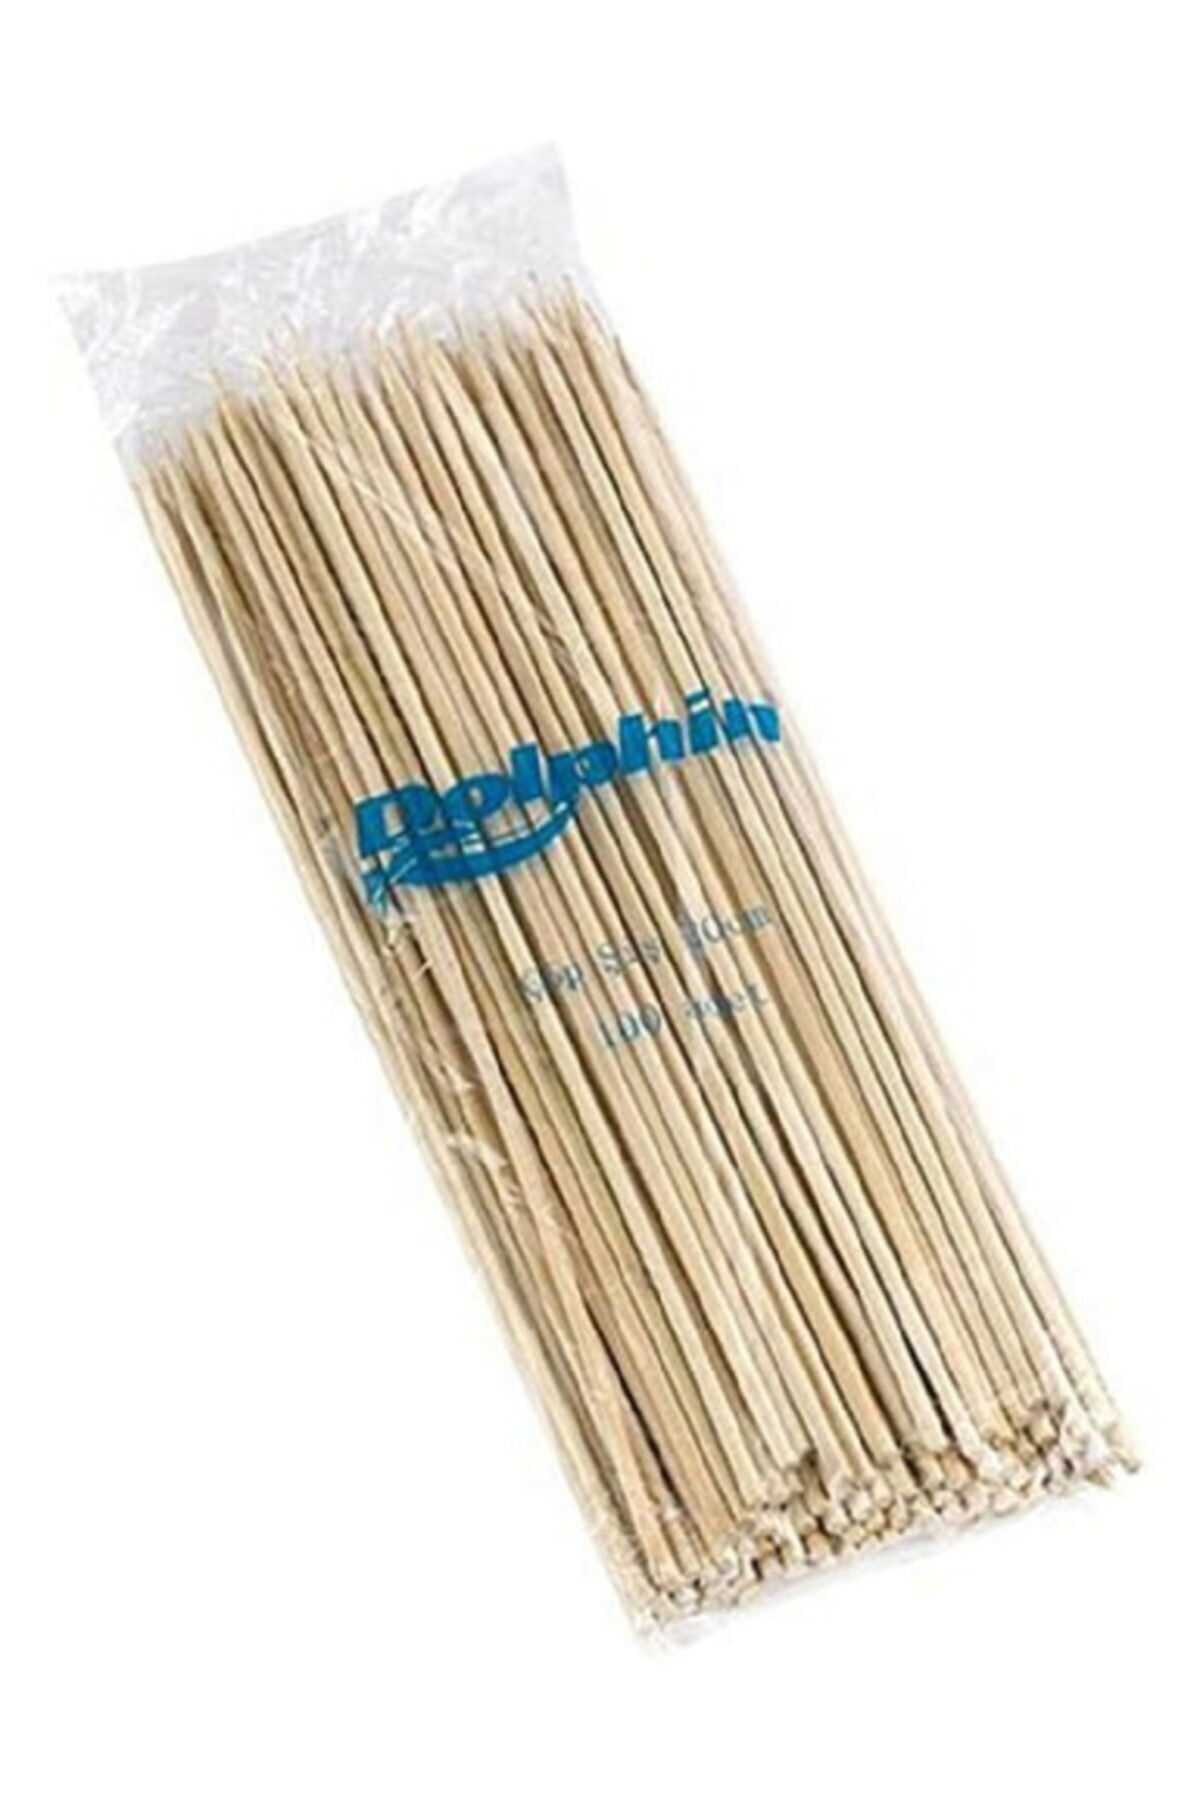 PSC Dolphin Bambu Çöp Şiş Bamboo Skewers 20cm - 100 Adet